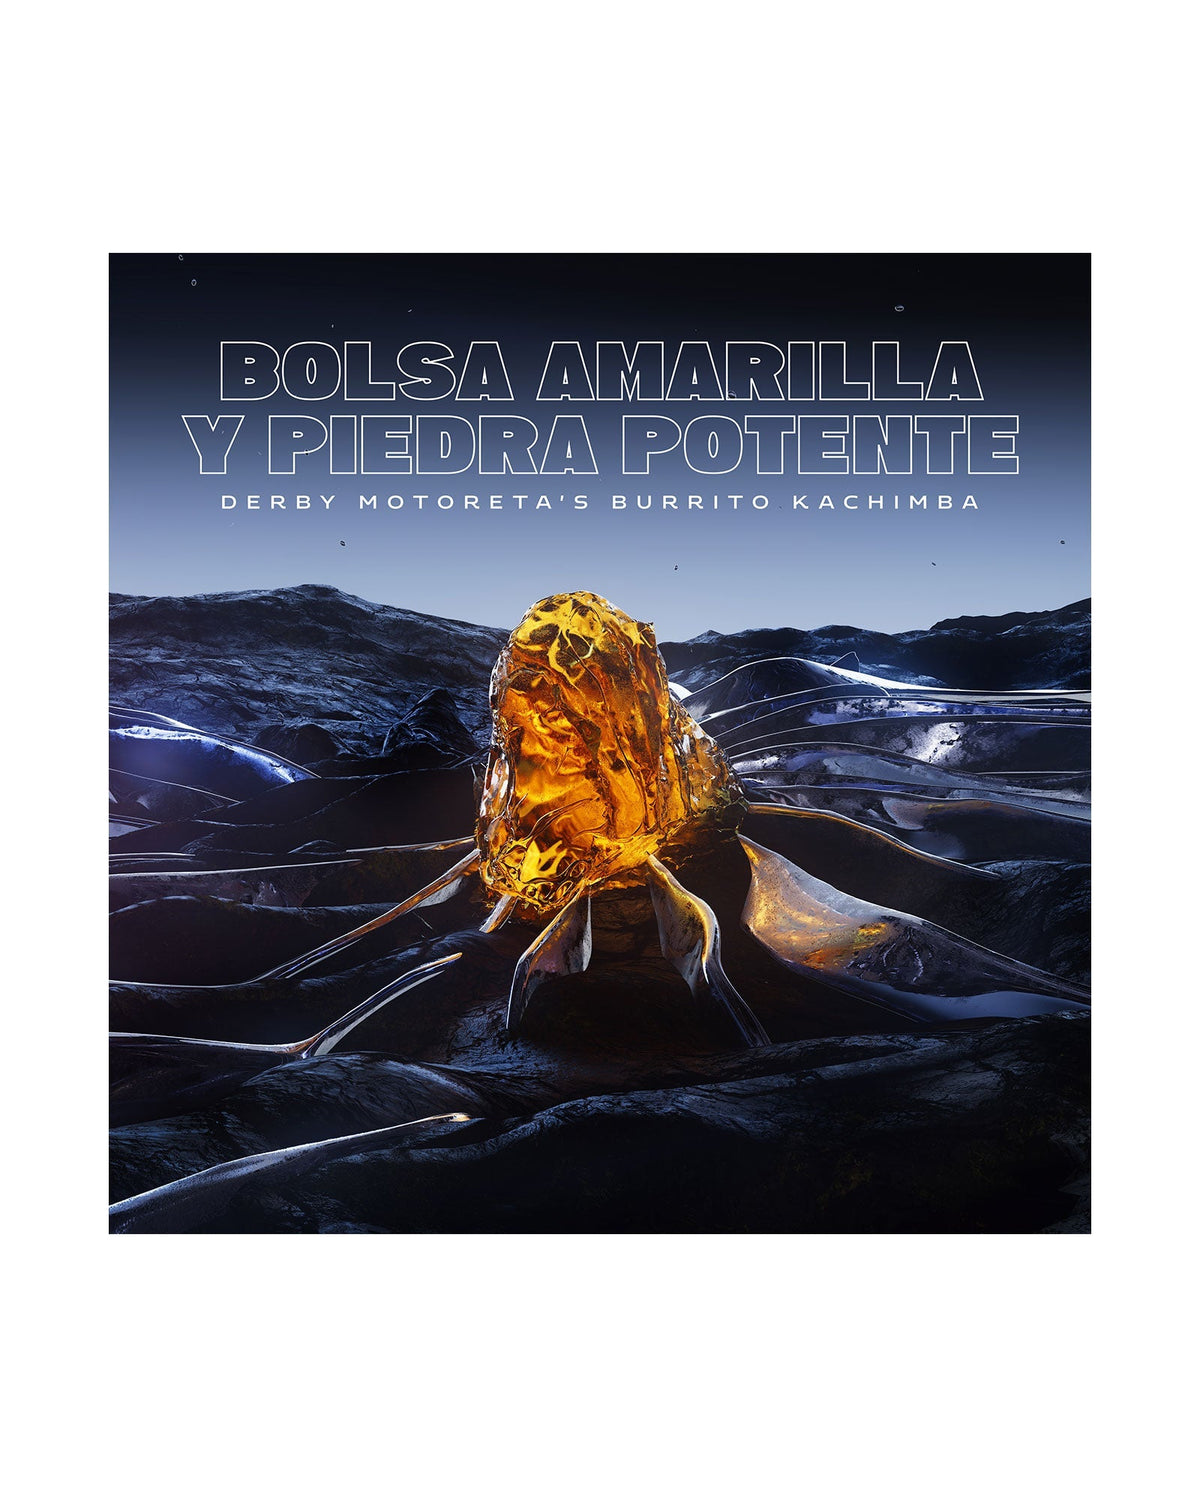 Derby Motoreta’s Burrito Kachimba - CD "Bolsa Amarilla y Piedra Potente" - D2fy · Rocktud - Rocktud